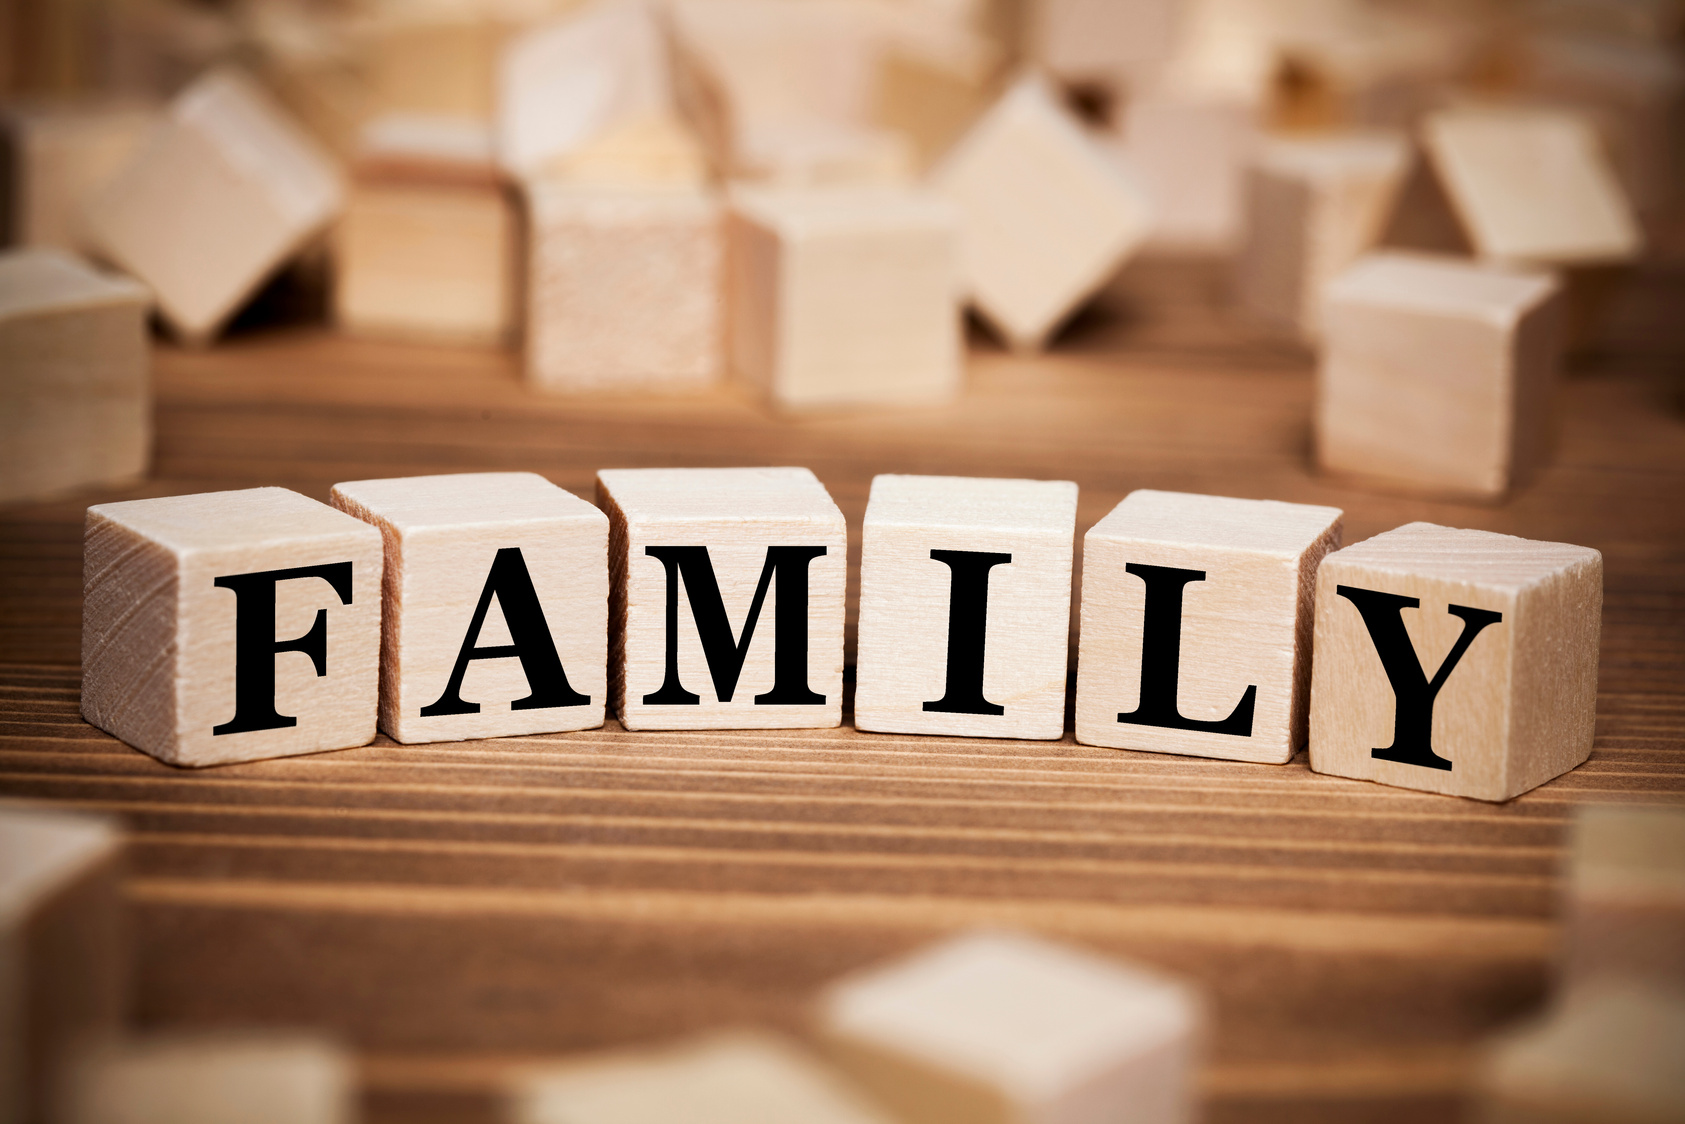 ,, Family"